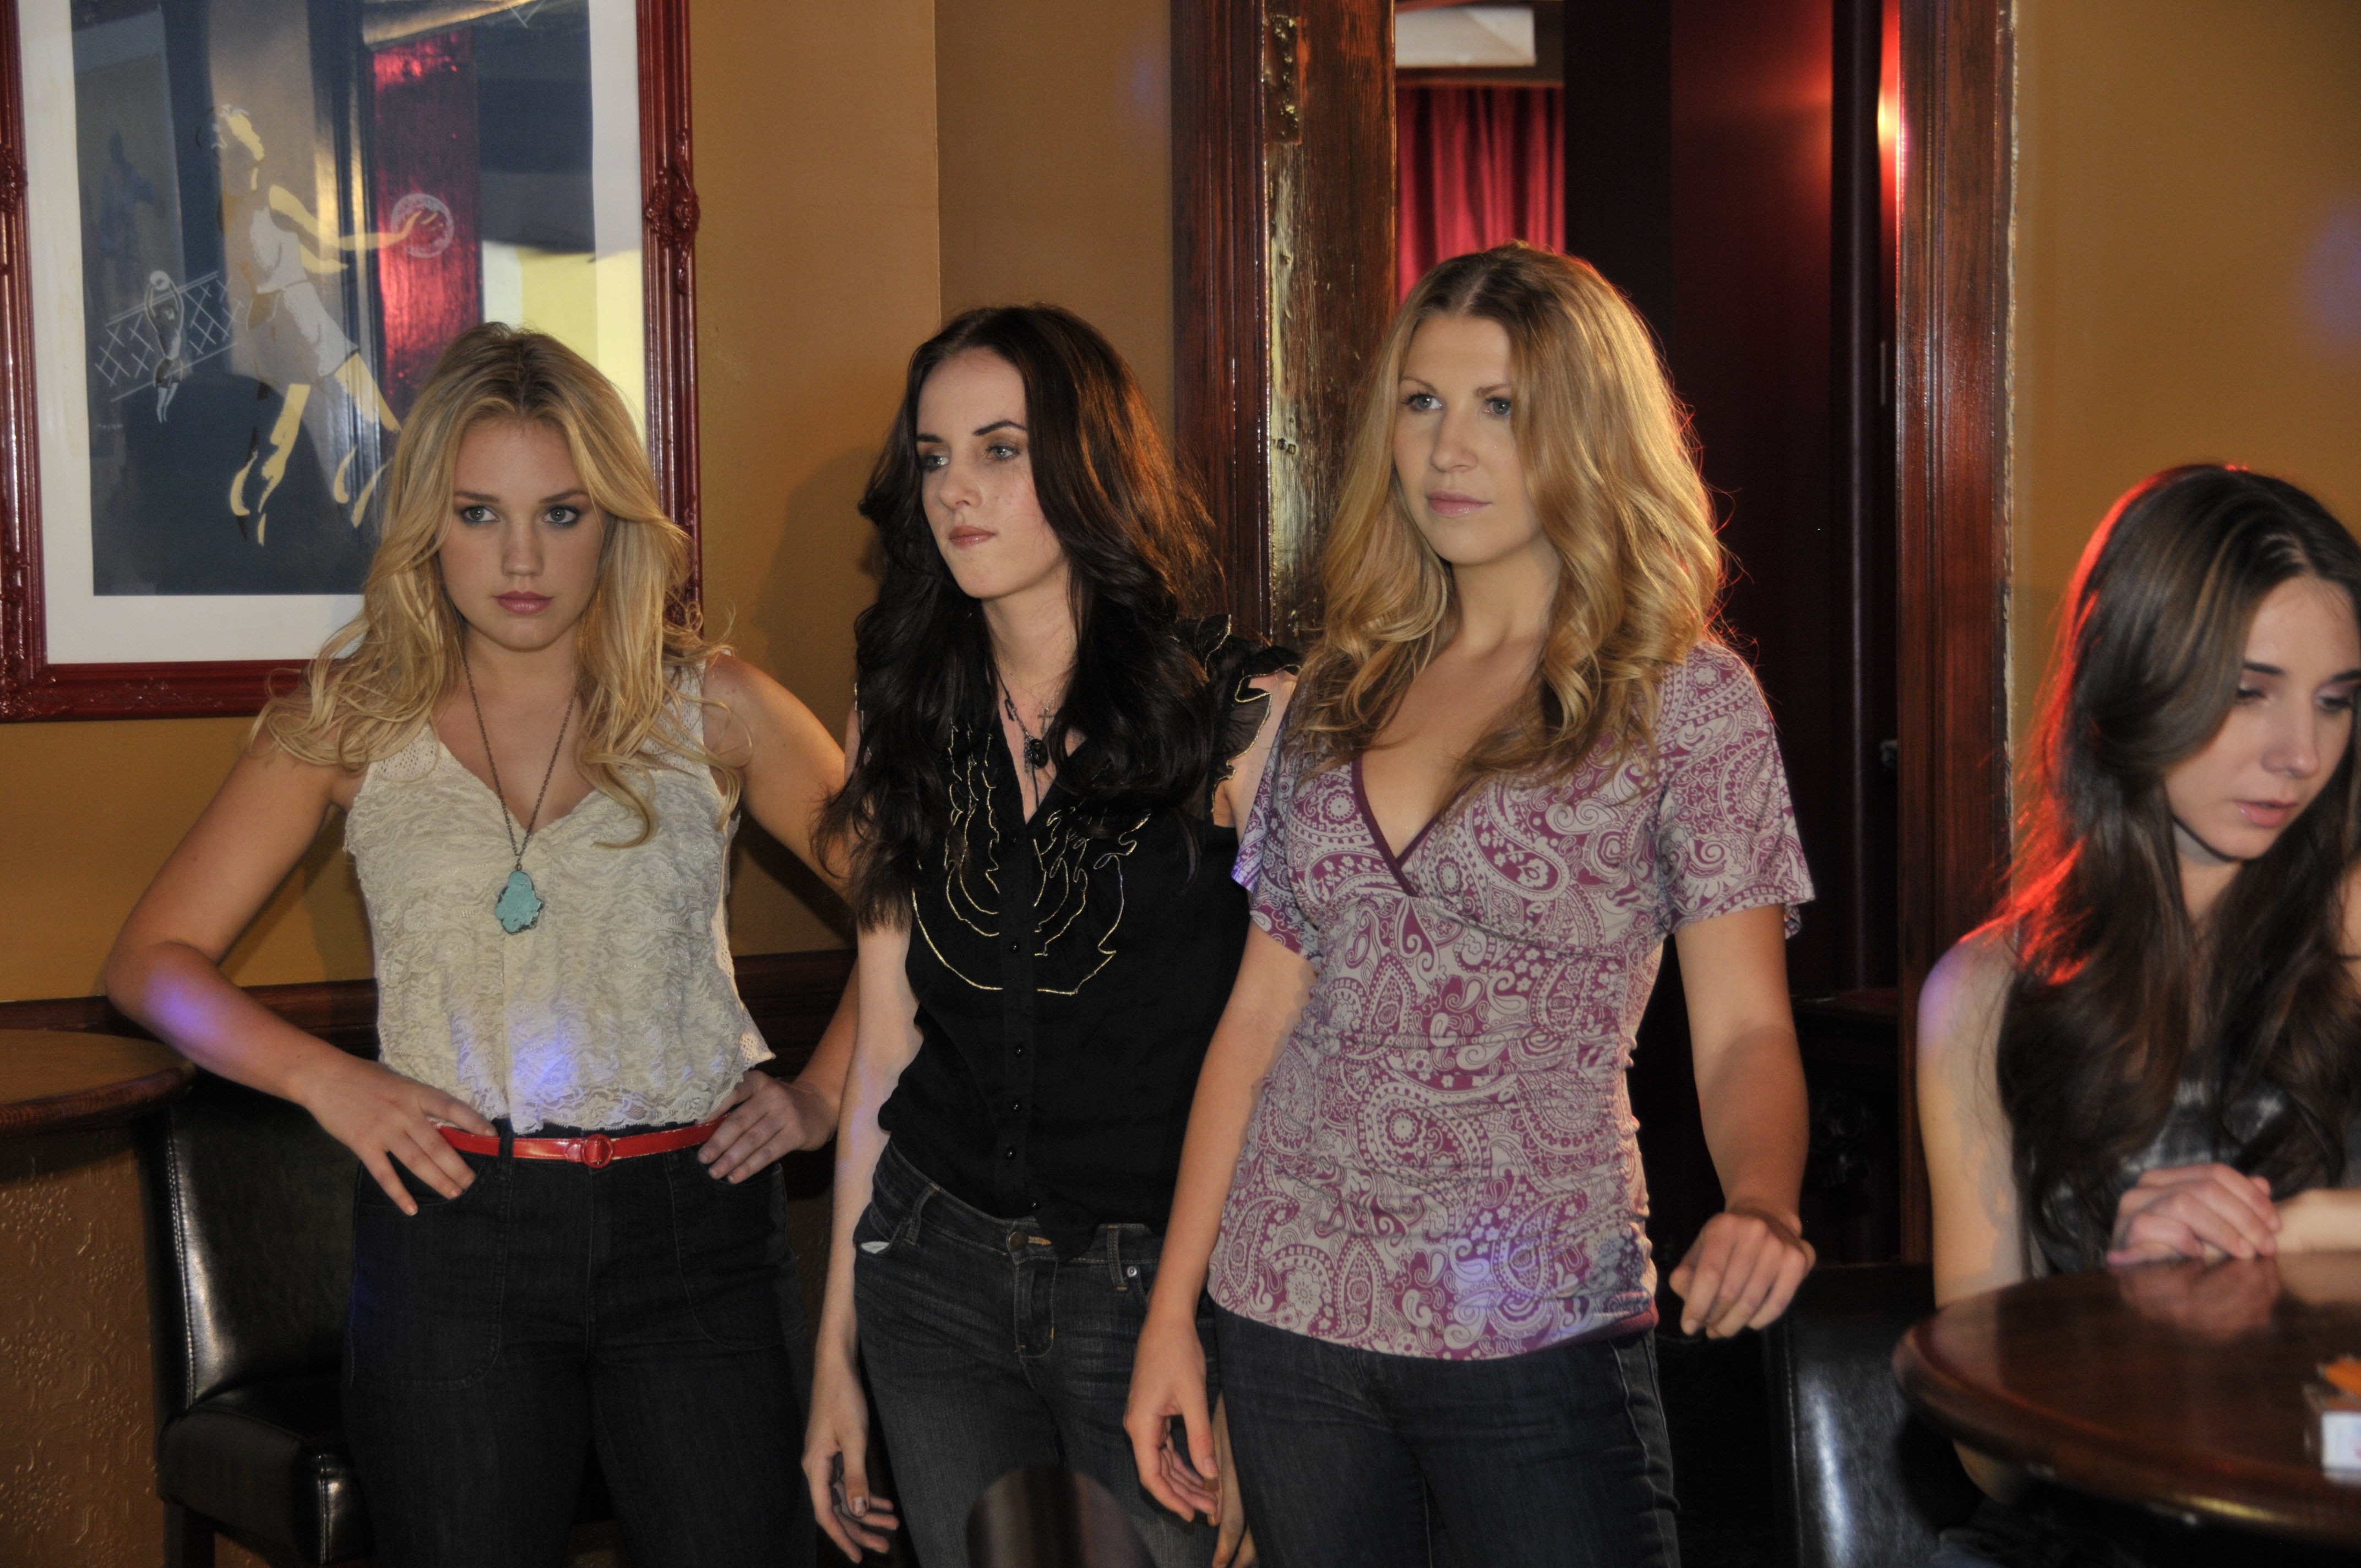 Ashley (Maggie Talbot-Minkon), Sally (Leah Lyons), Stephanie (Courtney Murphy) walk into Kalebs Bar in Fat City.